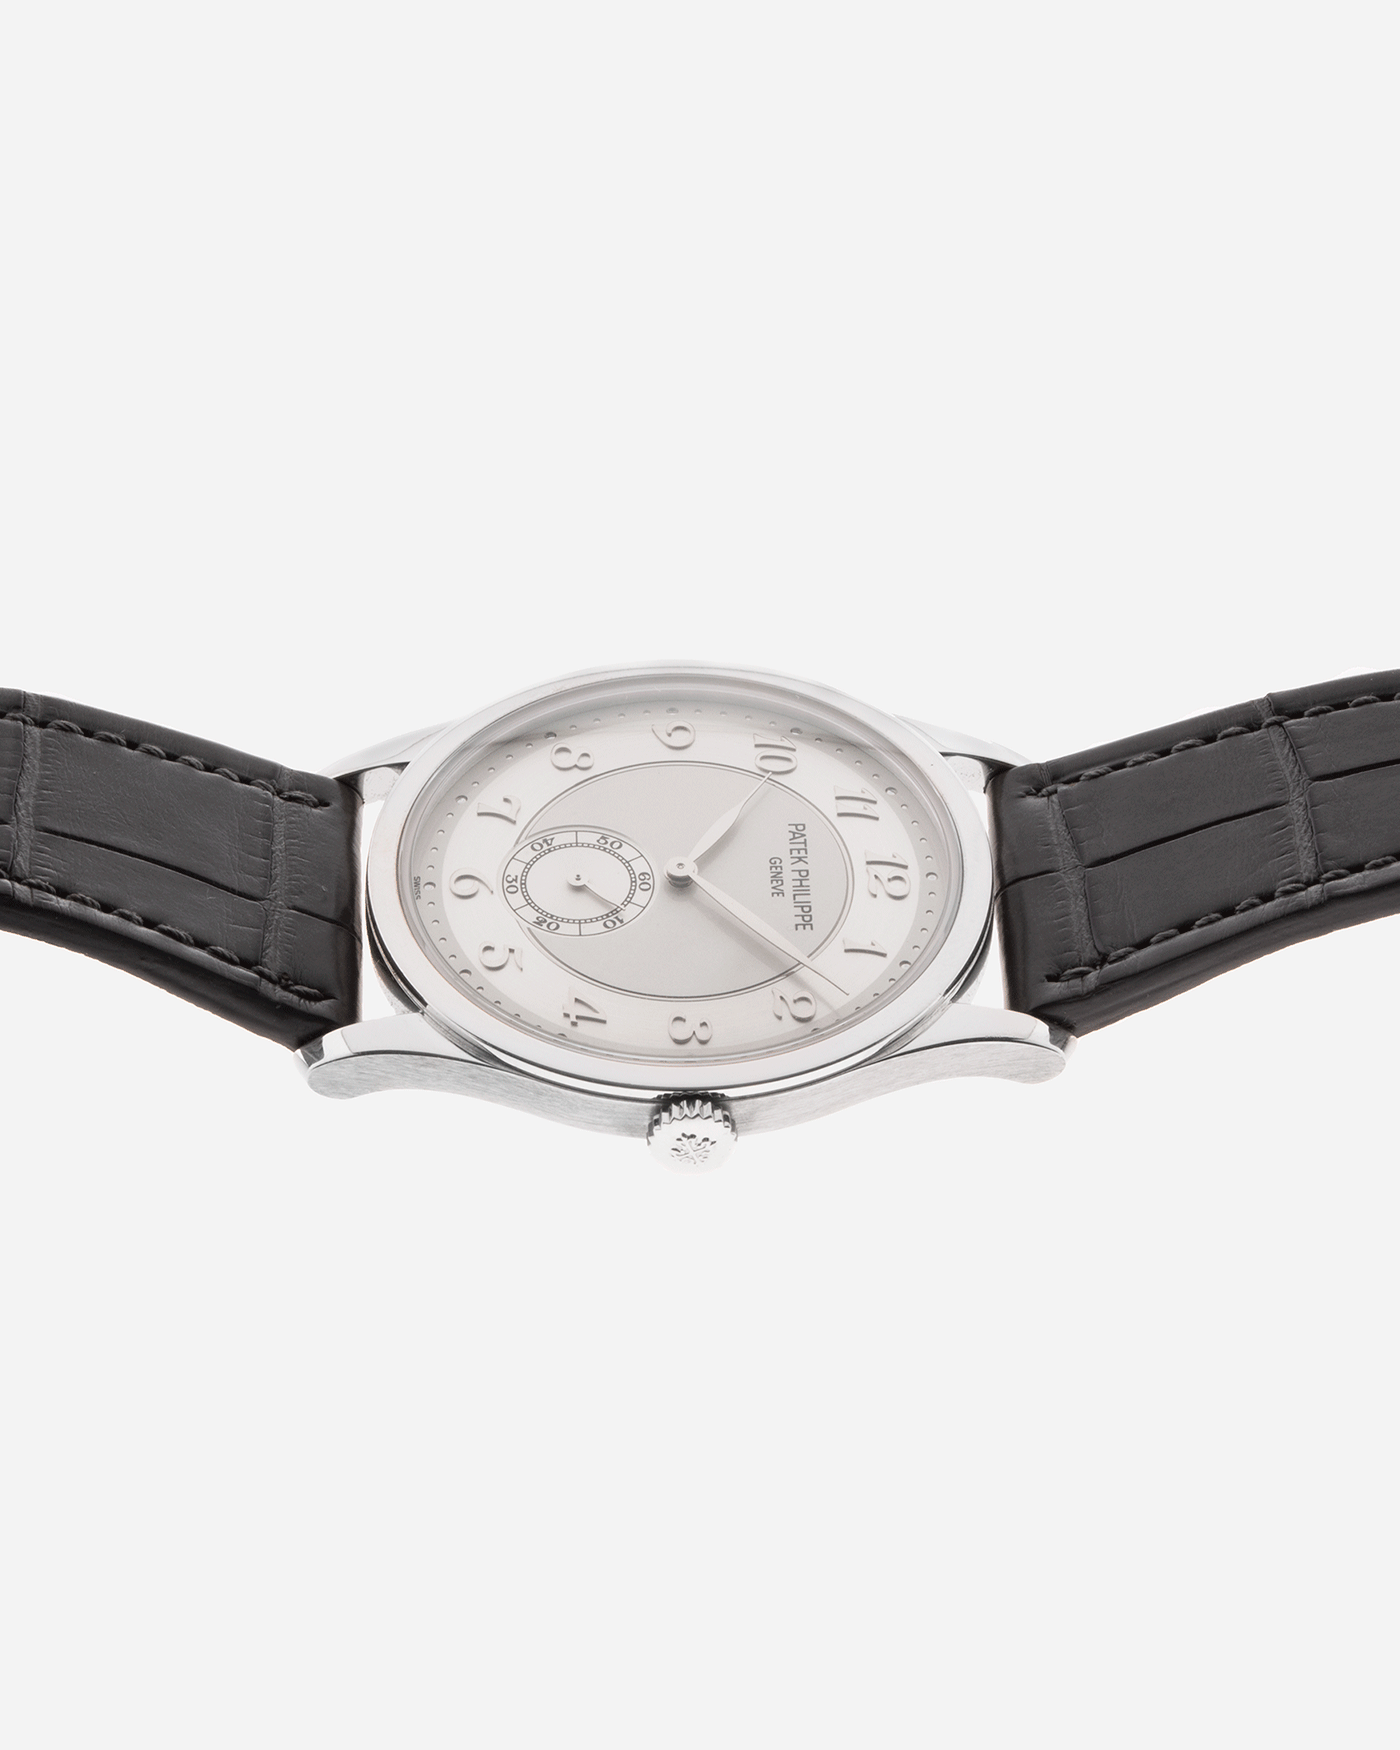 Patek Philippe Calatrava 5196P Platinum Watch | S.Song Timepieces 